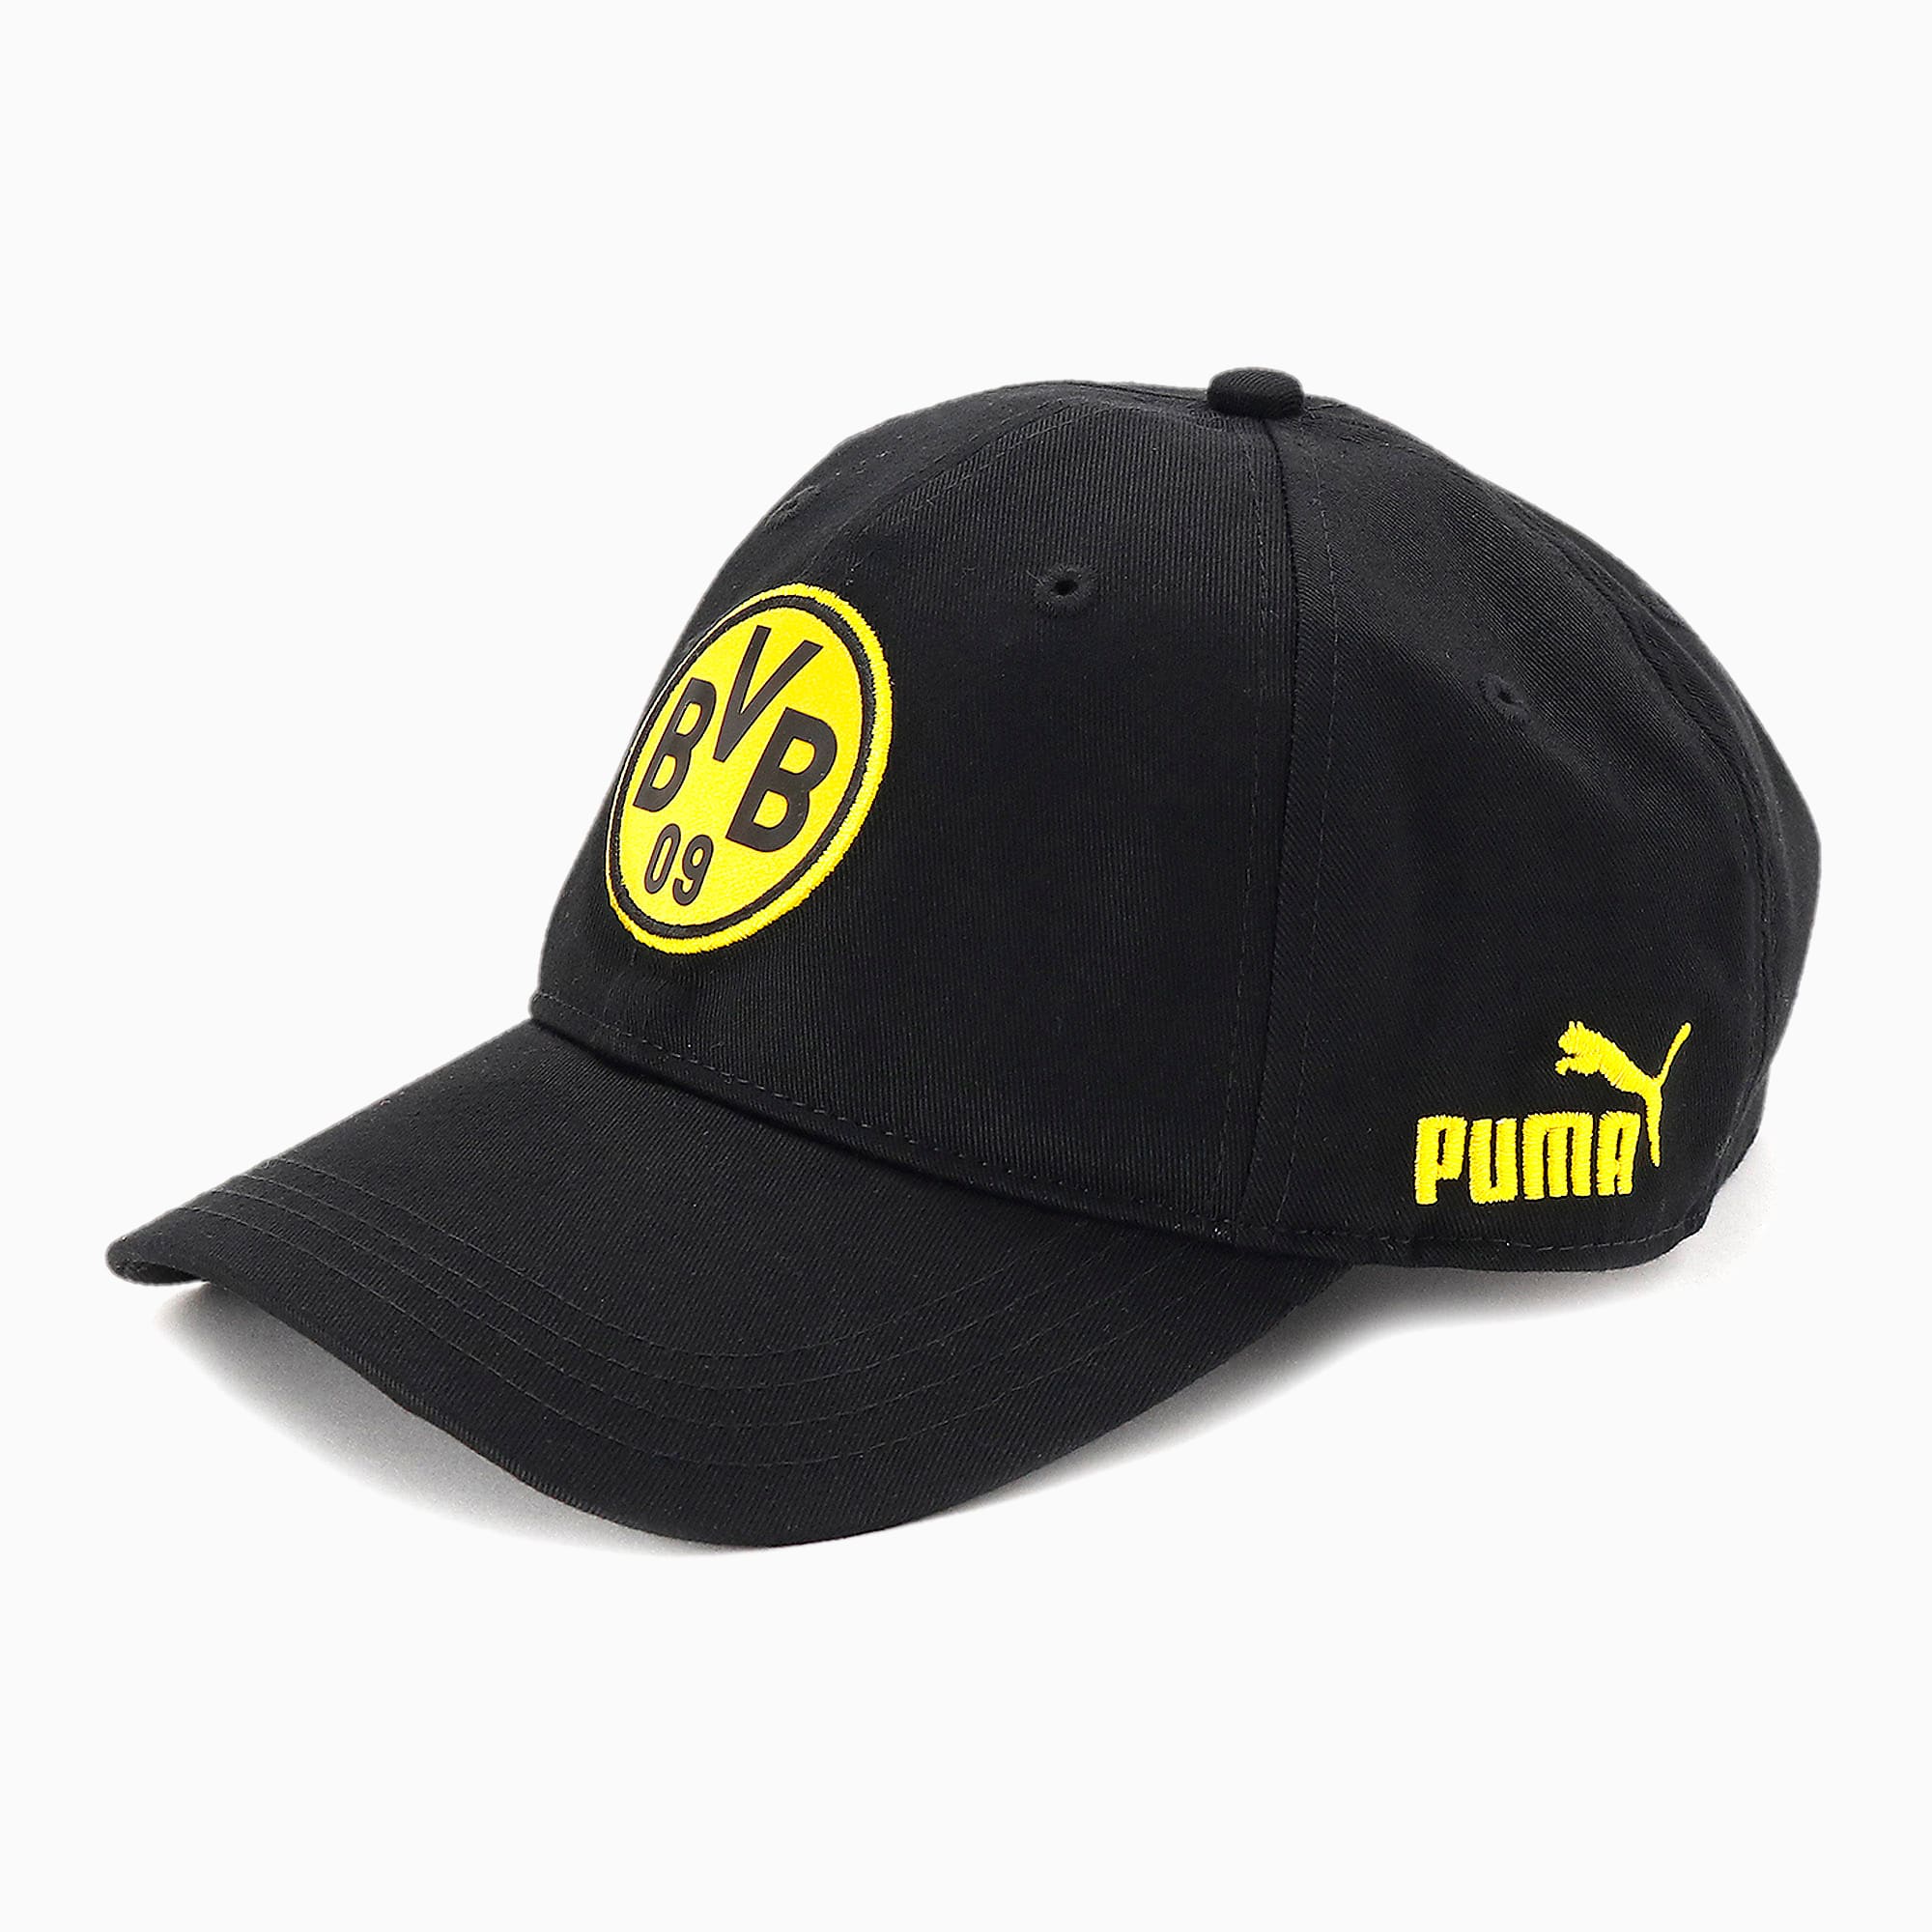 Puma公式 ドルトムント Bvb Ftblculture ベースボール キャップ サッカー ユニフォーム 帽子 プーマ ボルシア ドルトムント プーマ